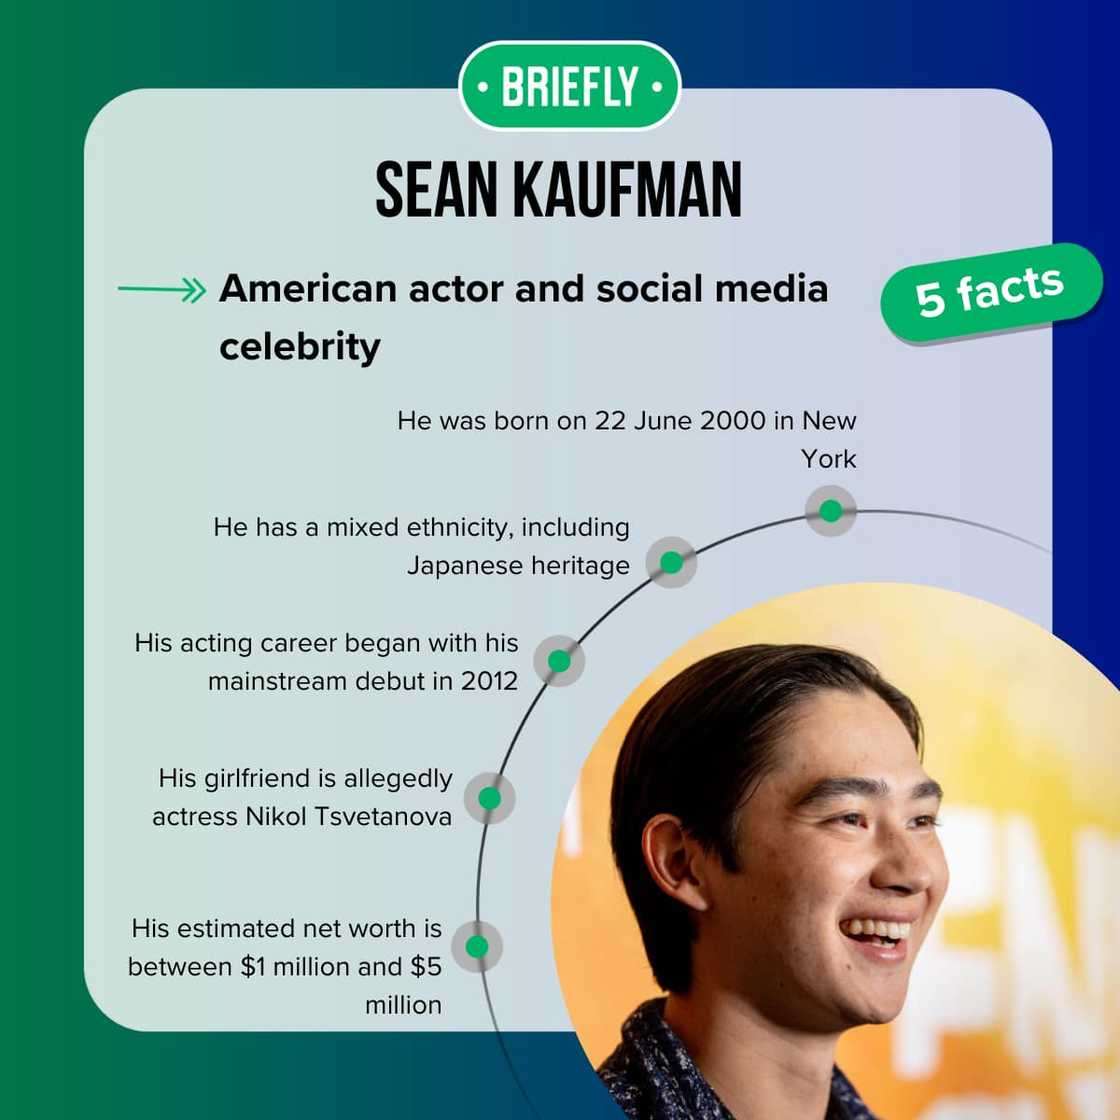 Sean Kaufman's facts